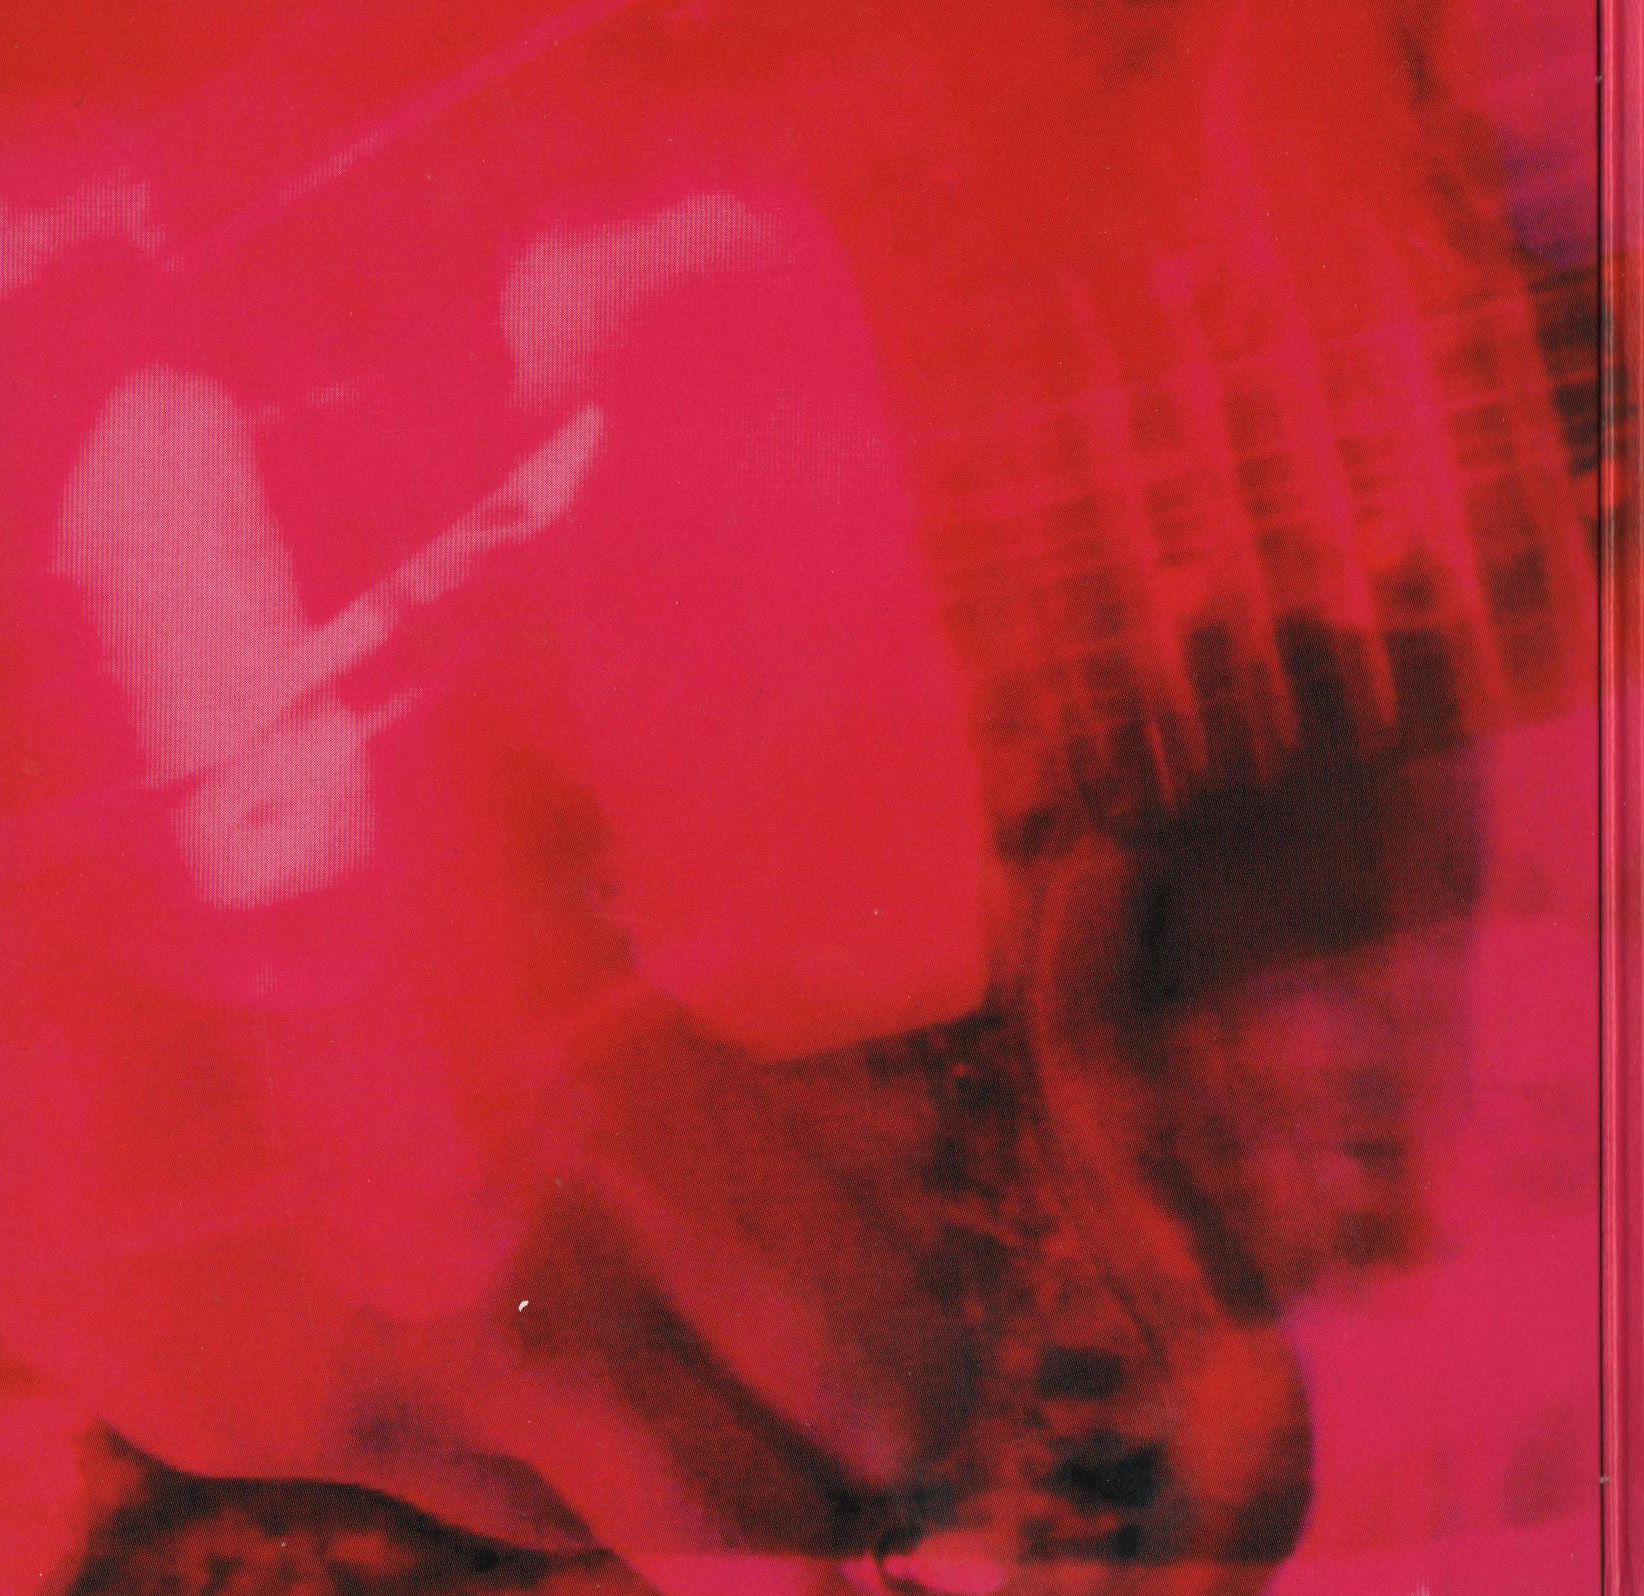 Release “Loveless” by My Bloody Valentine - Cover Art - MusicBrainz